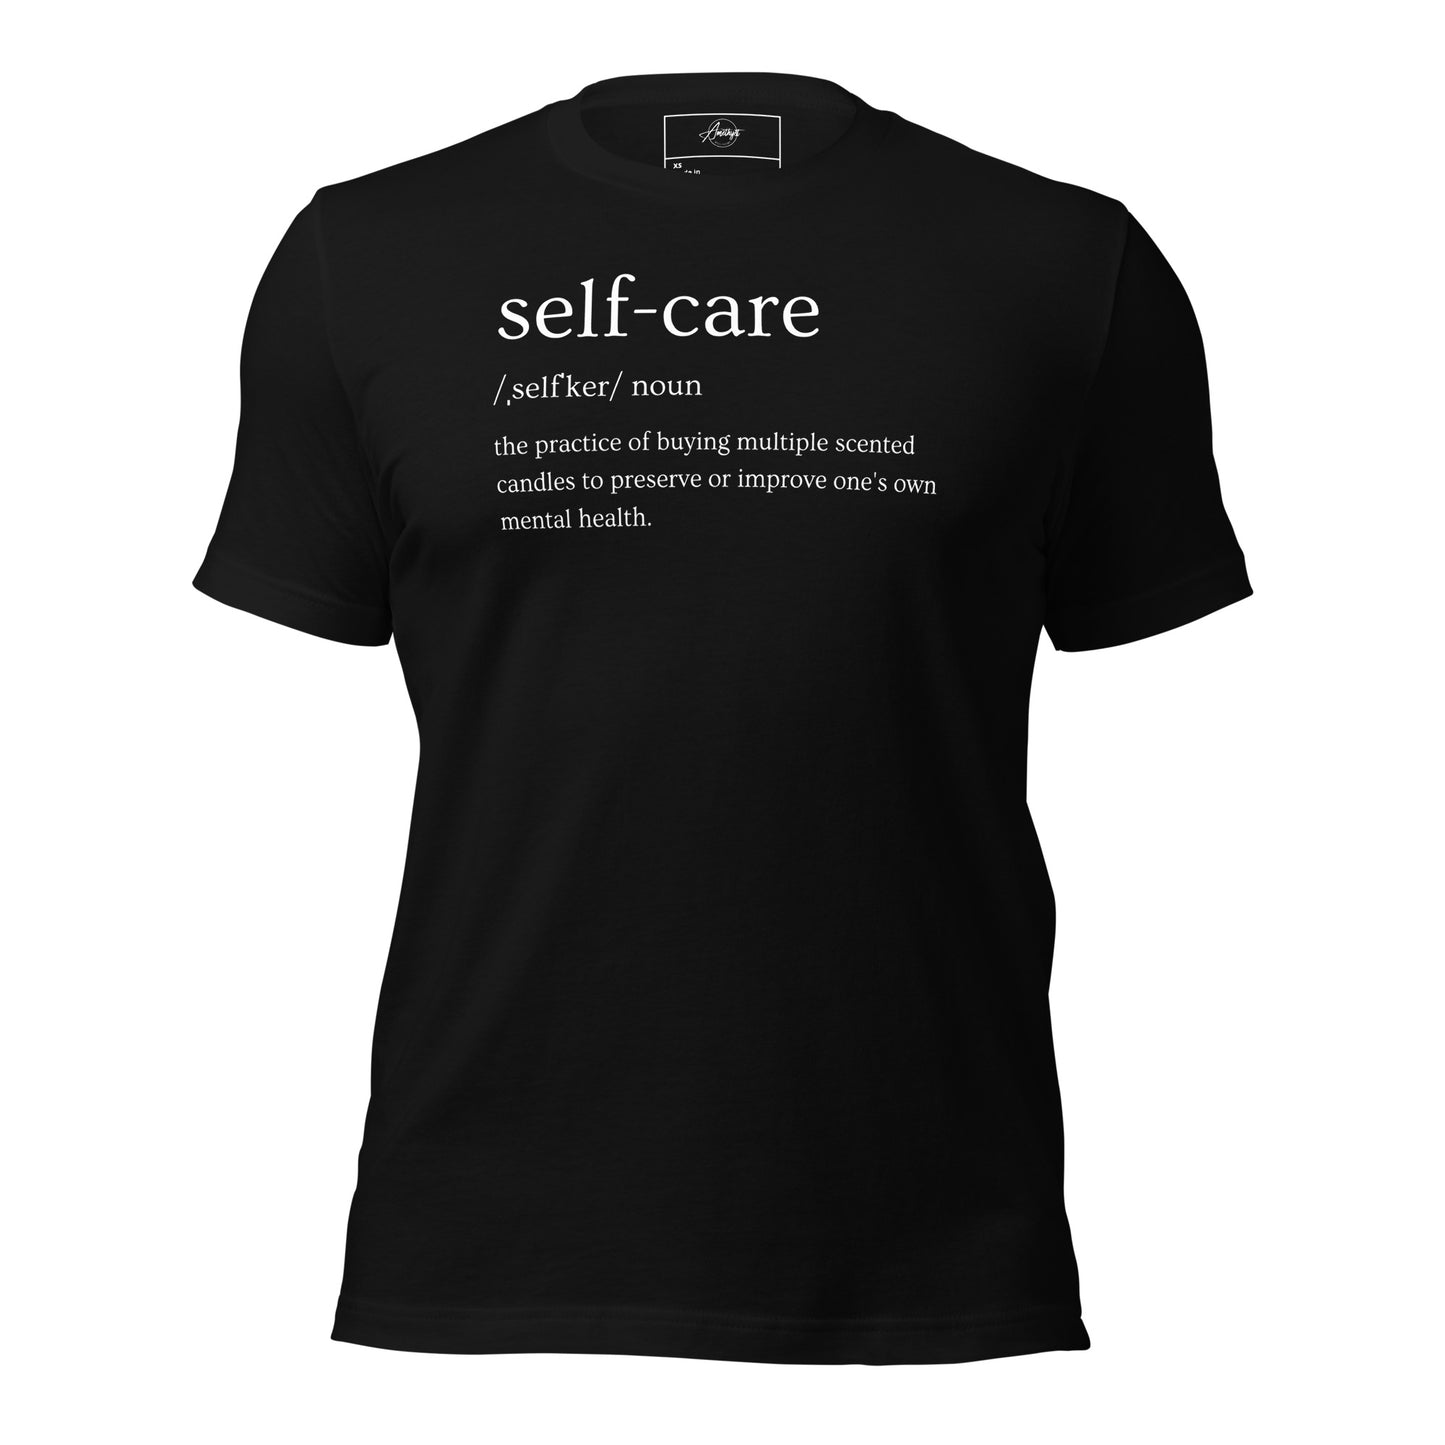 SELF CARE Unisex t-shirt